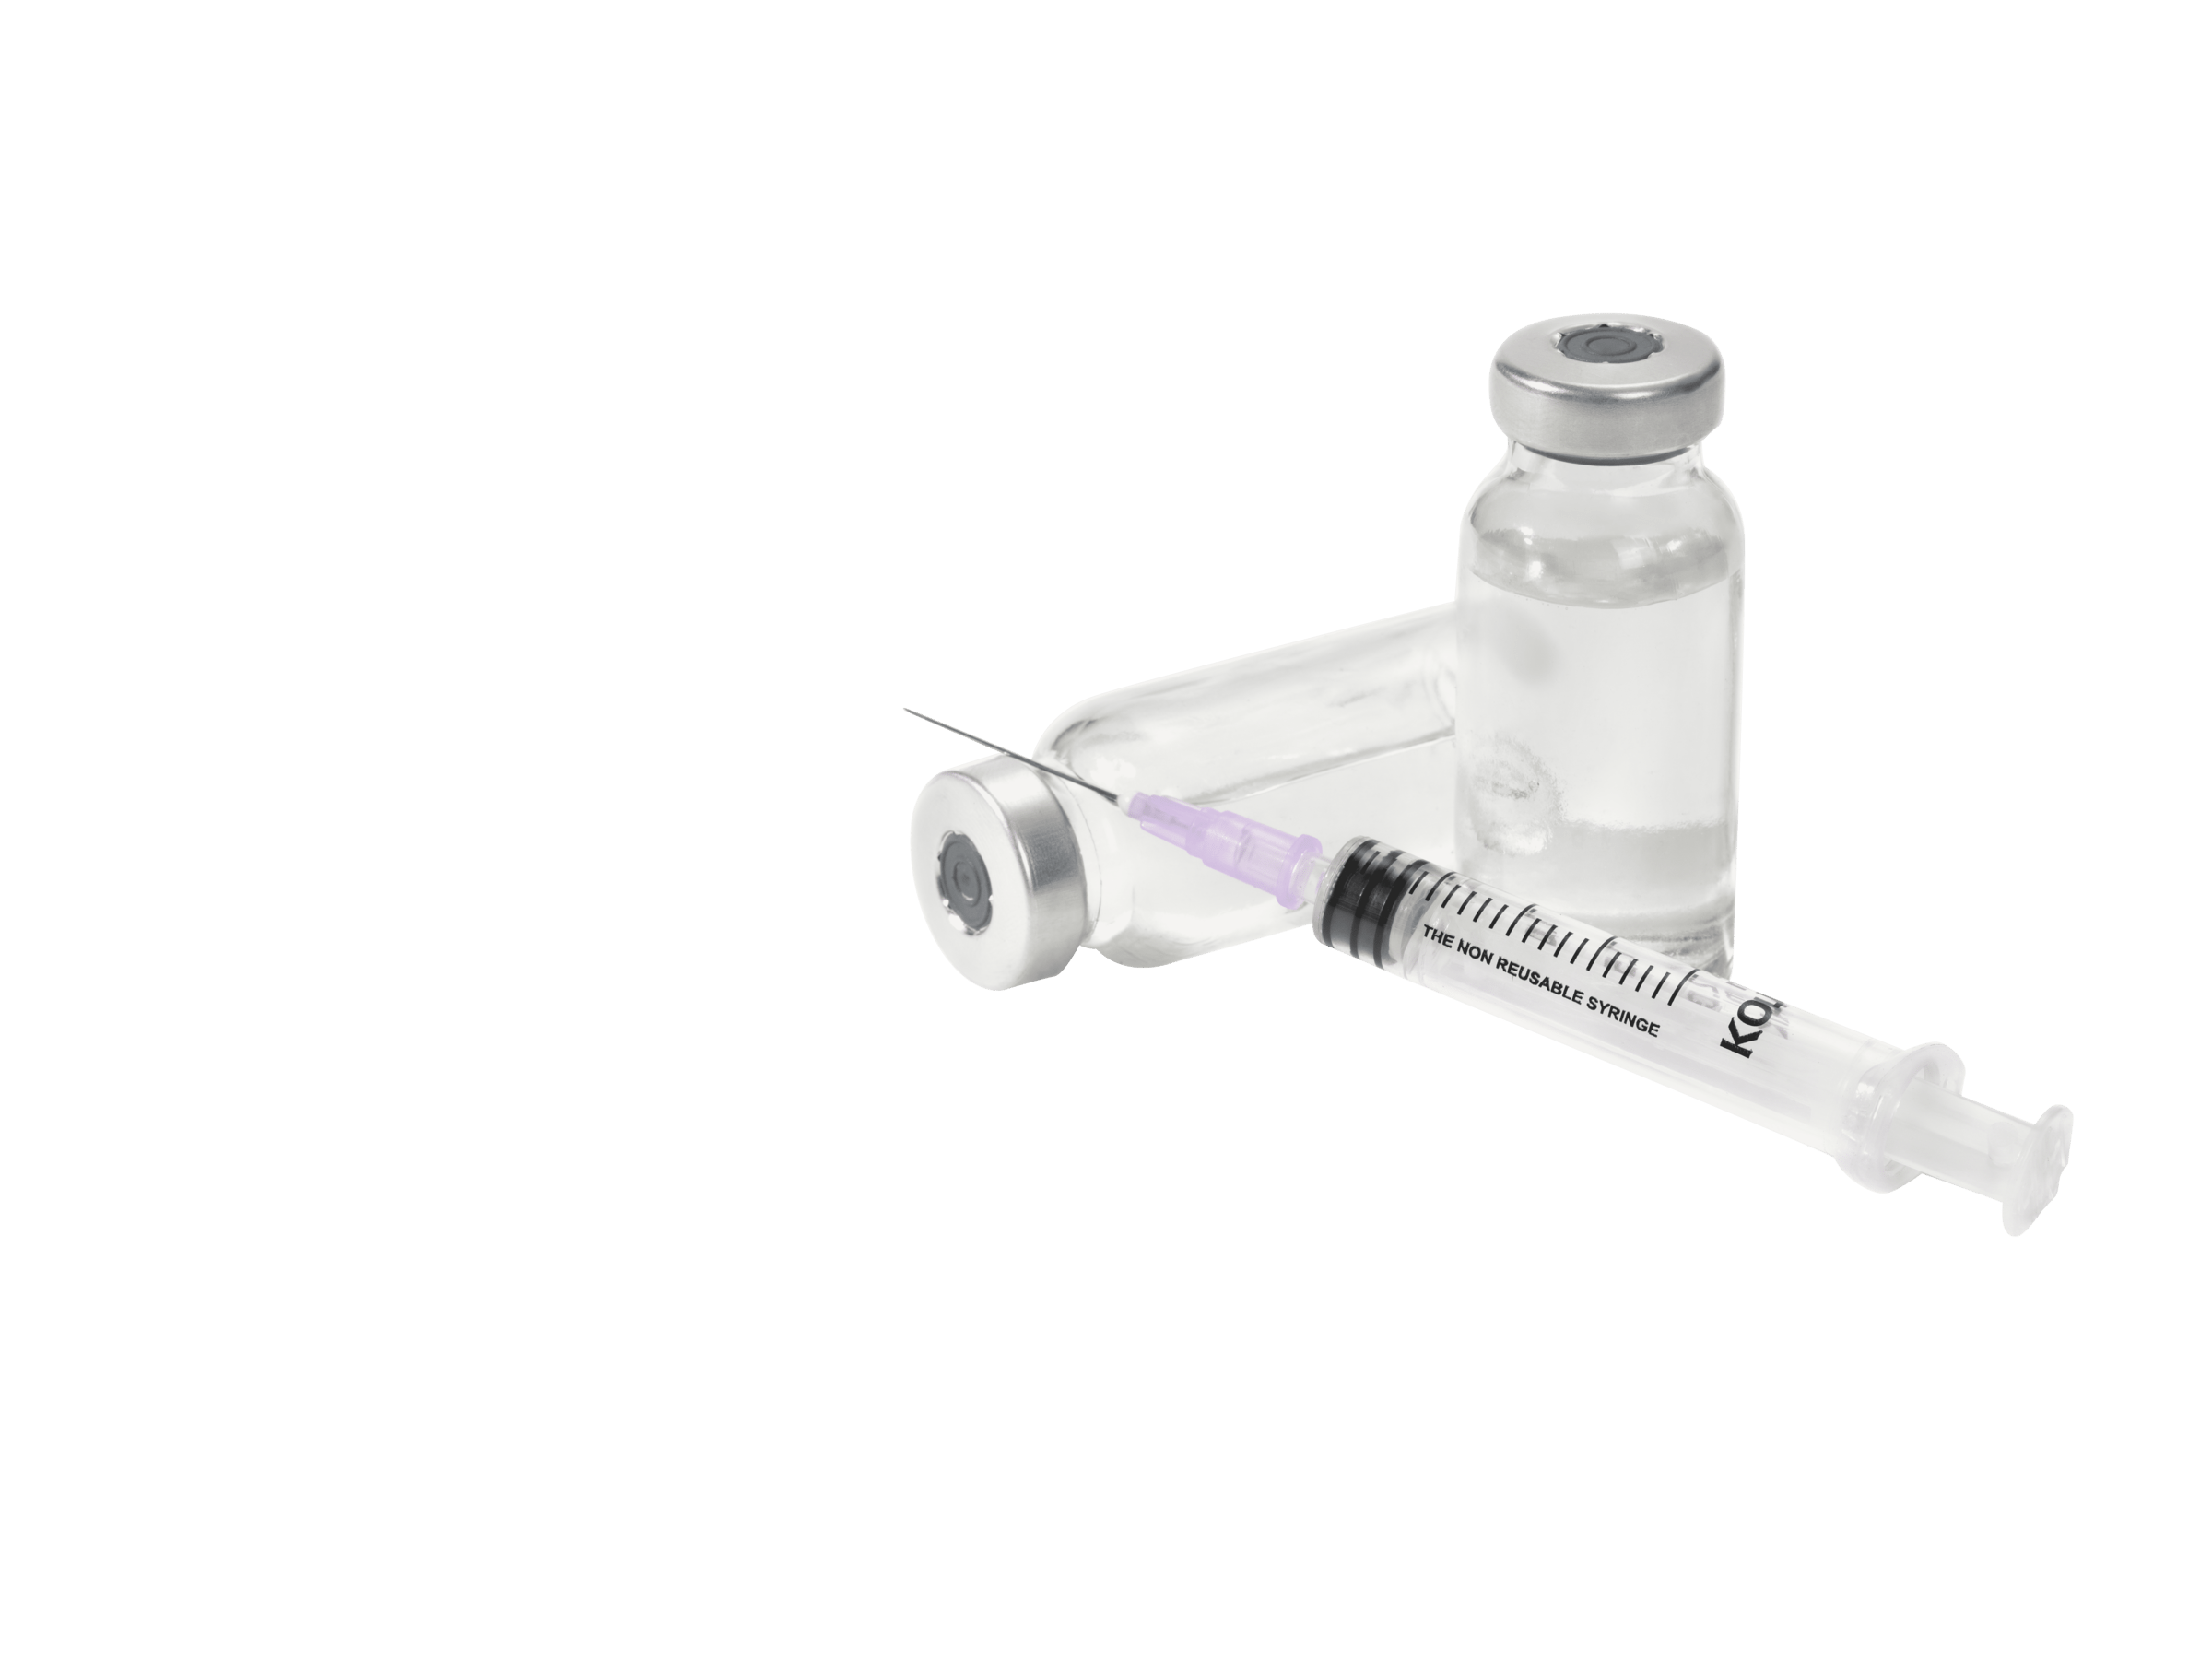 Safe and Sterile Kojak Selinge Auto-Disable Syringes for Medical photo